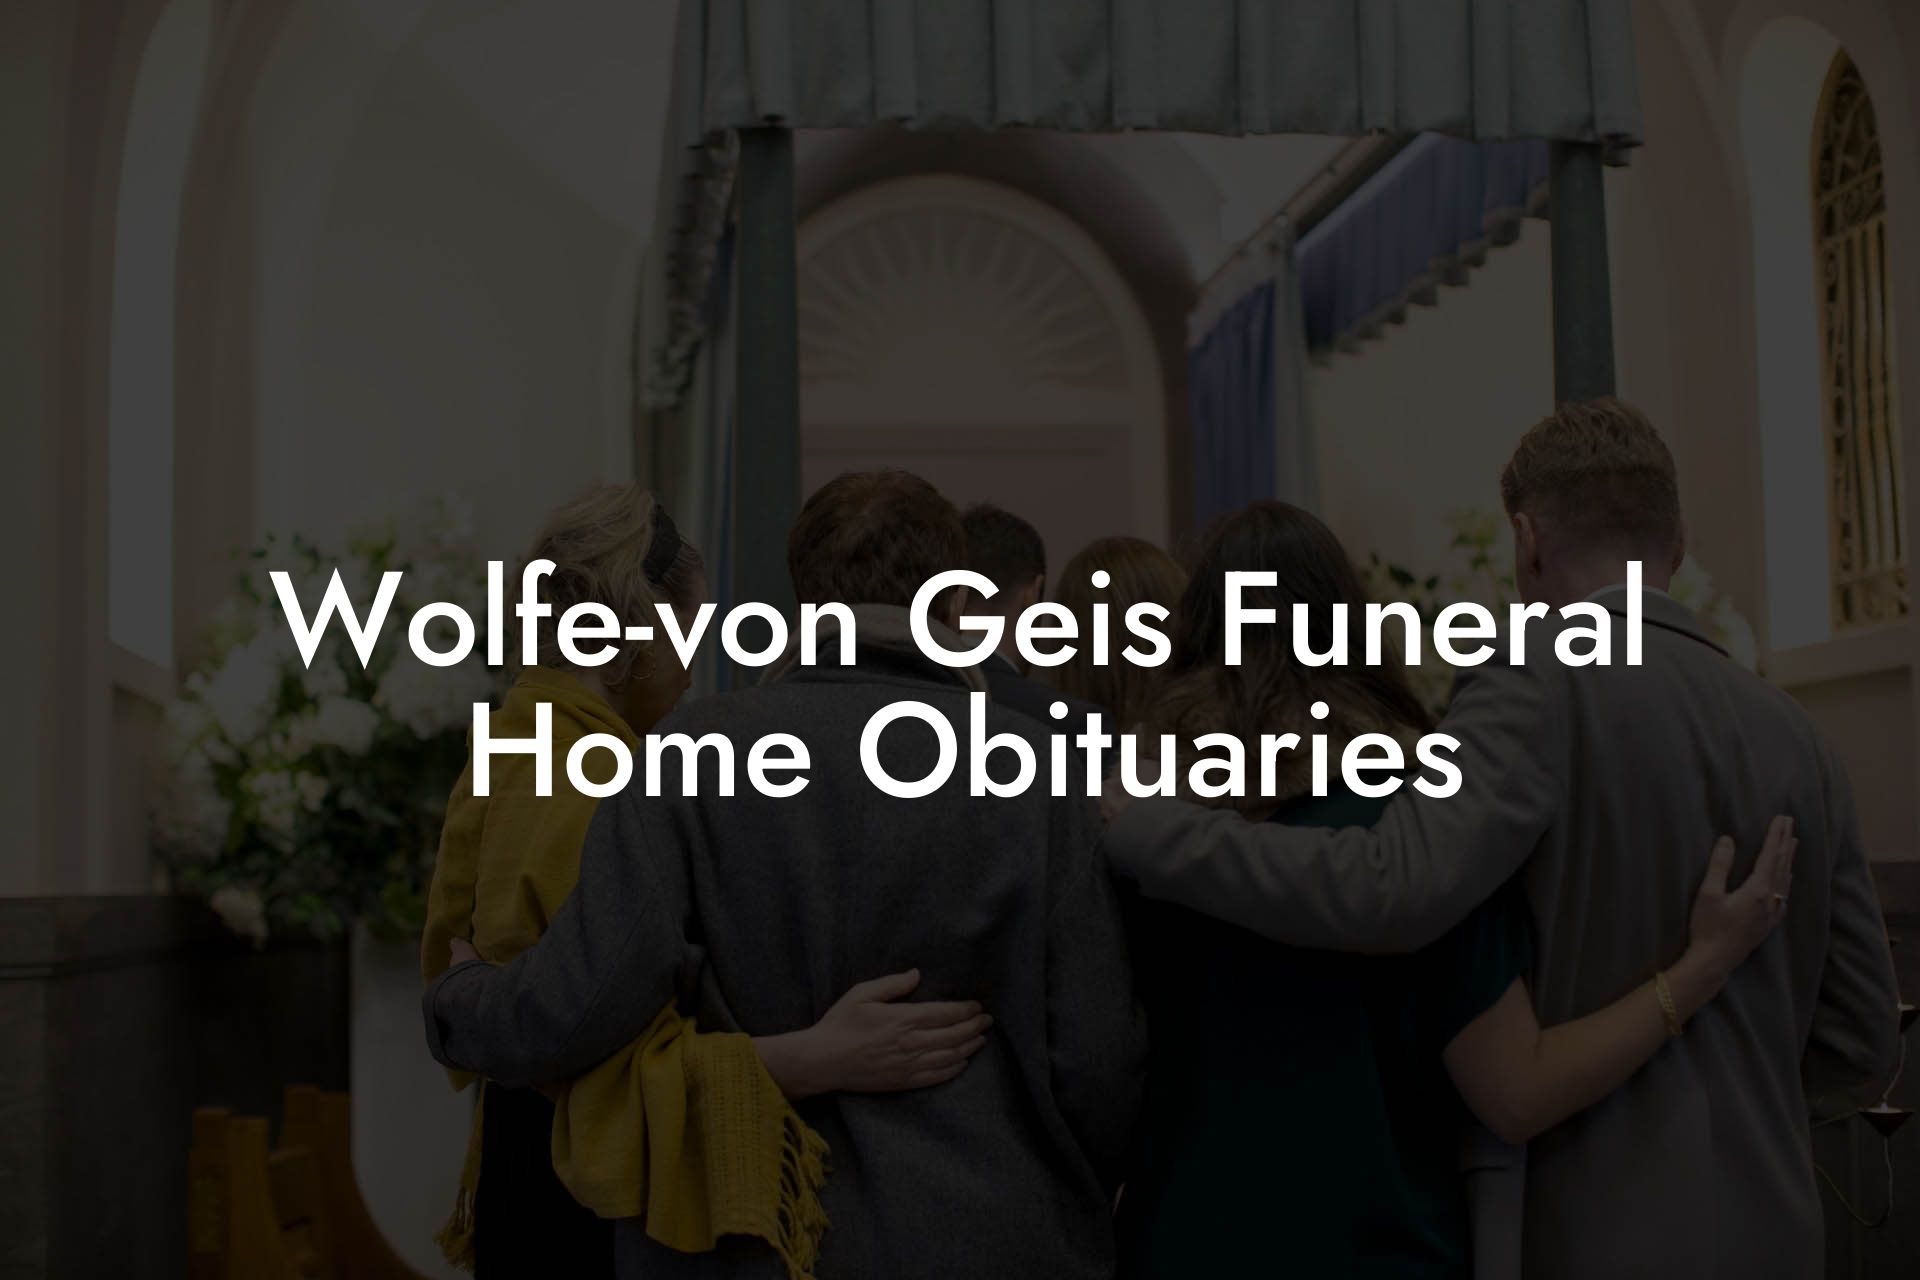 Wolfe-von Geis Funeral Home Obituaries